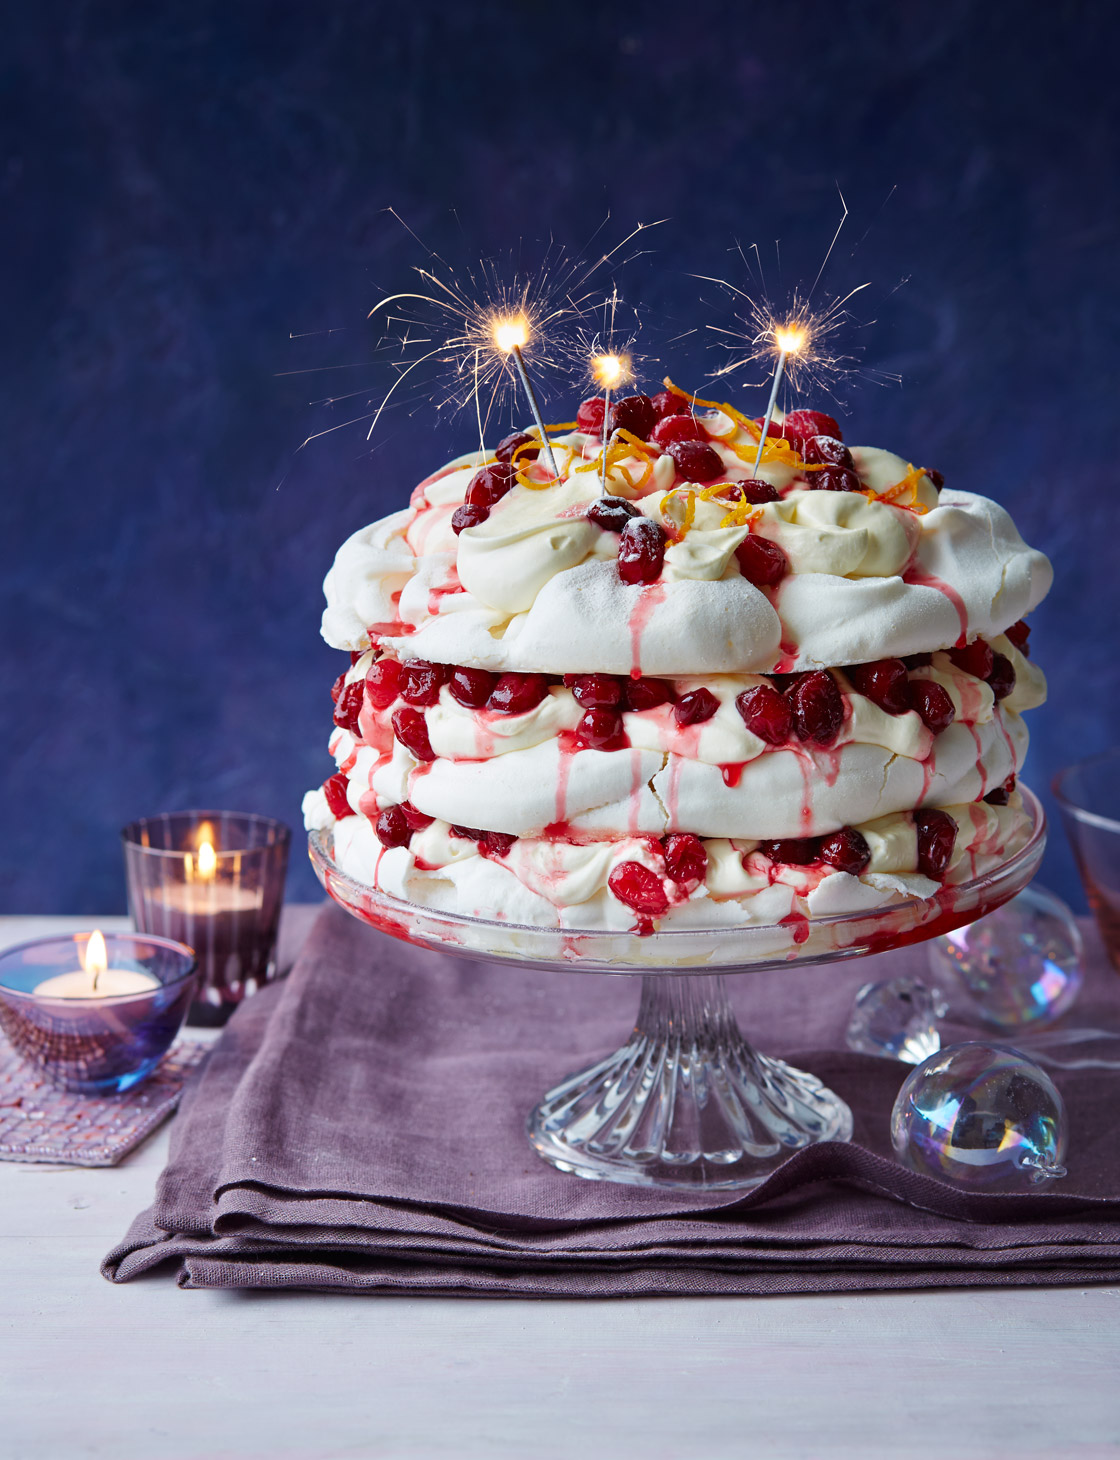 Chocolate Meringue Cake With Whipped Cream and Raspberries Recipe